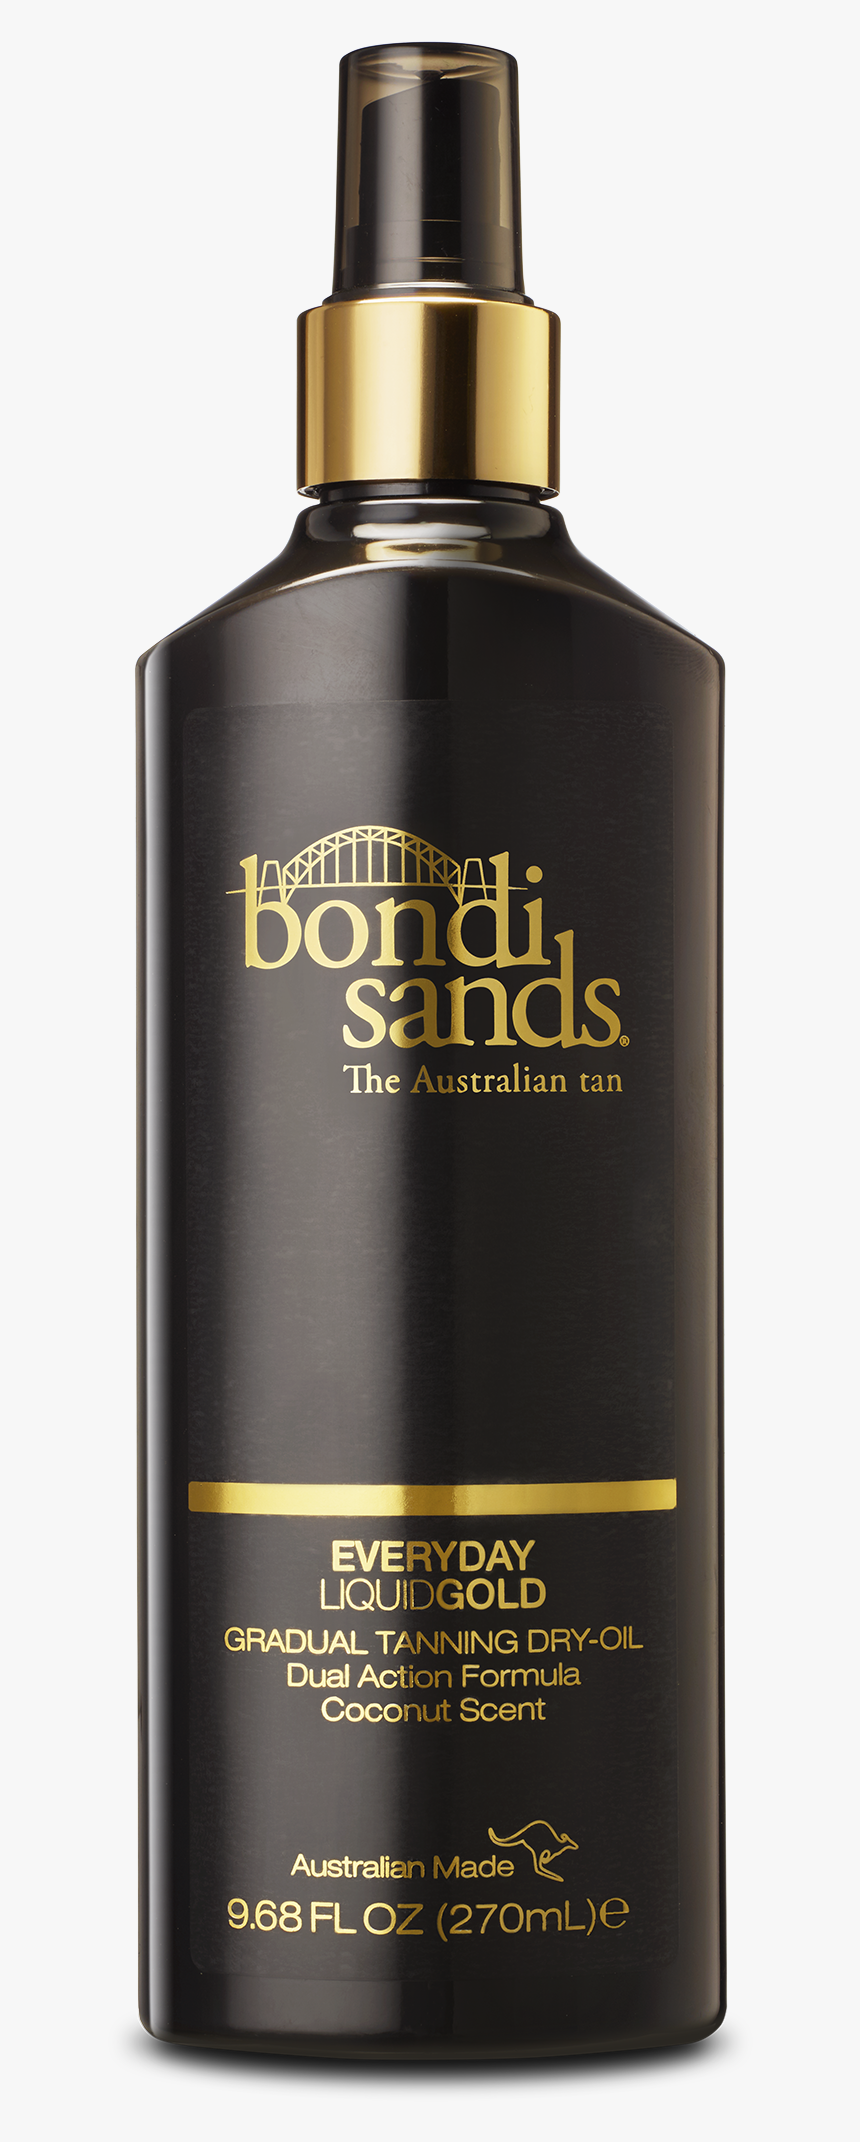 Bondi Sands Liquid Gold Everyday Gradual Tanning Oil